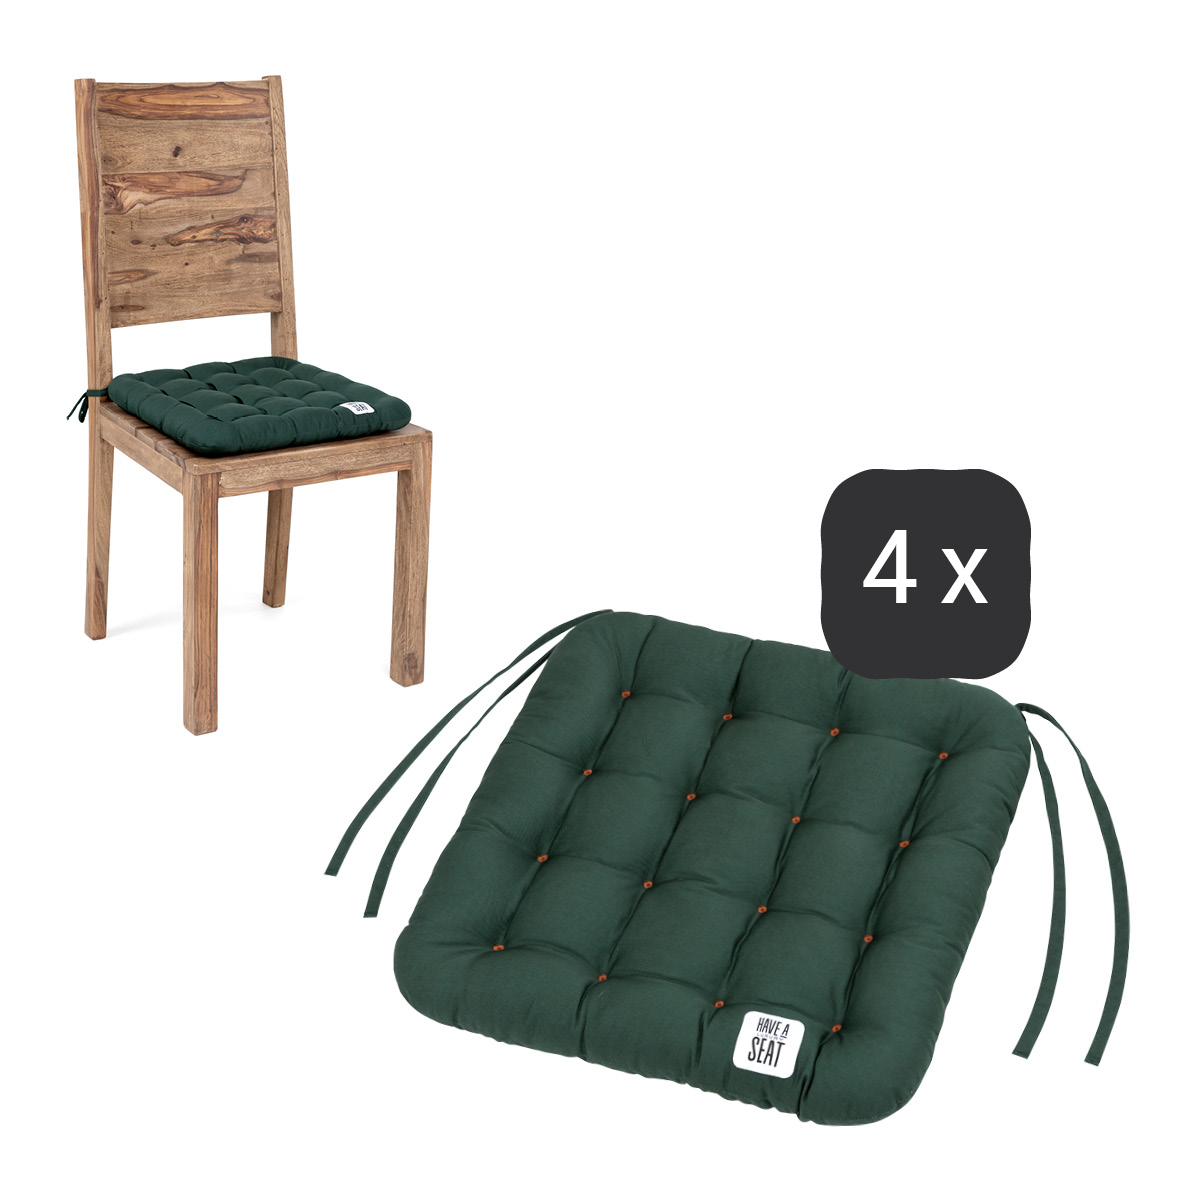 Stuhlkissen 40 x 40 cm | Moosgrün | 4er Set | Premium-Sitzkomfort | Indoor / Outdoor | waschbar bis 95°C | HAVE A SEAT Living